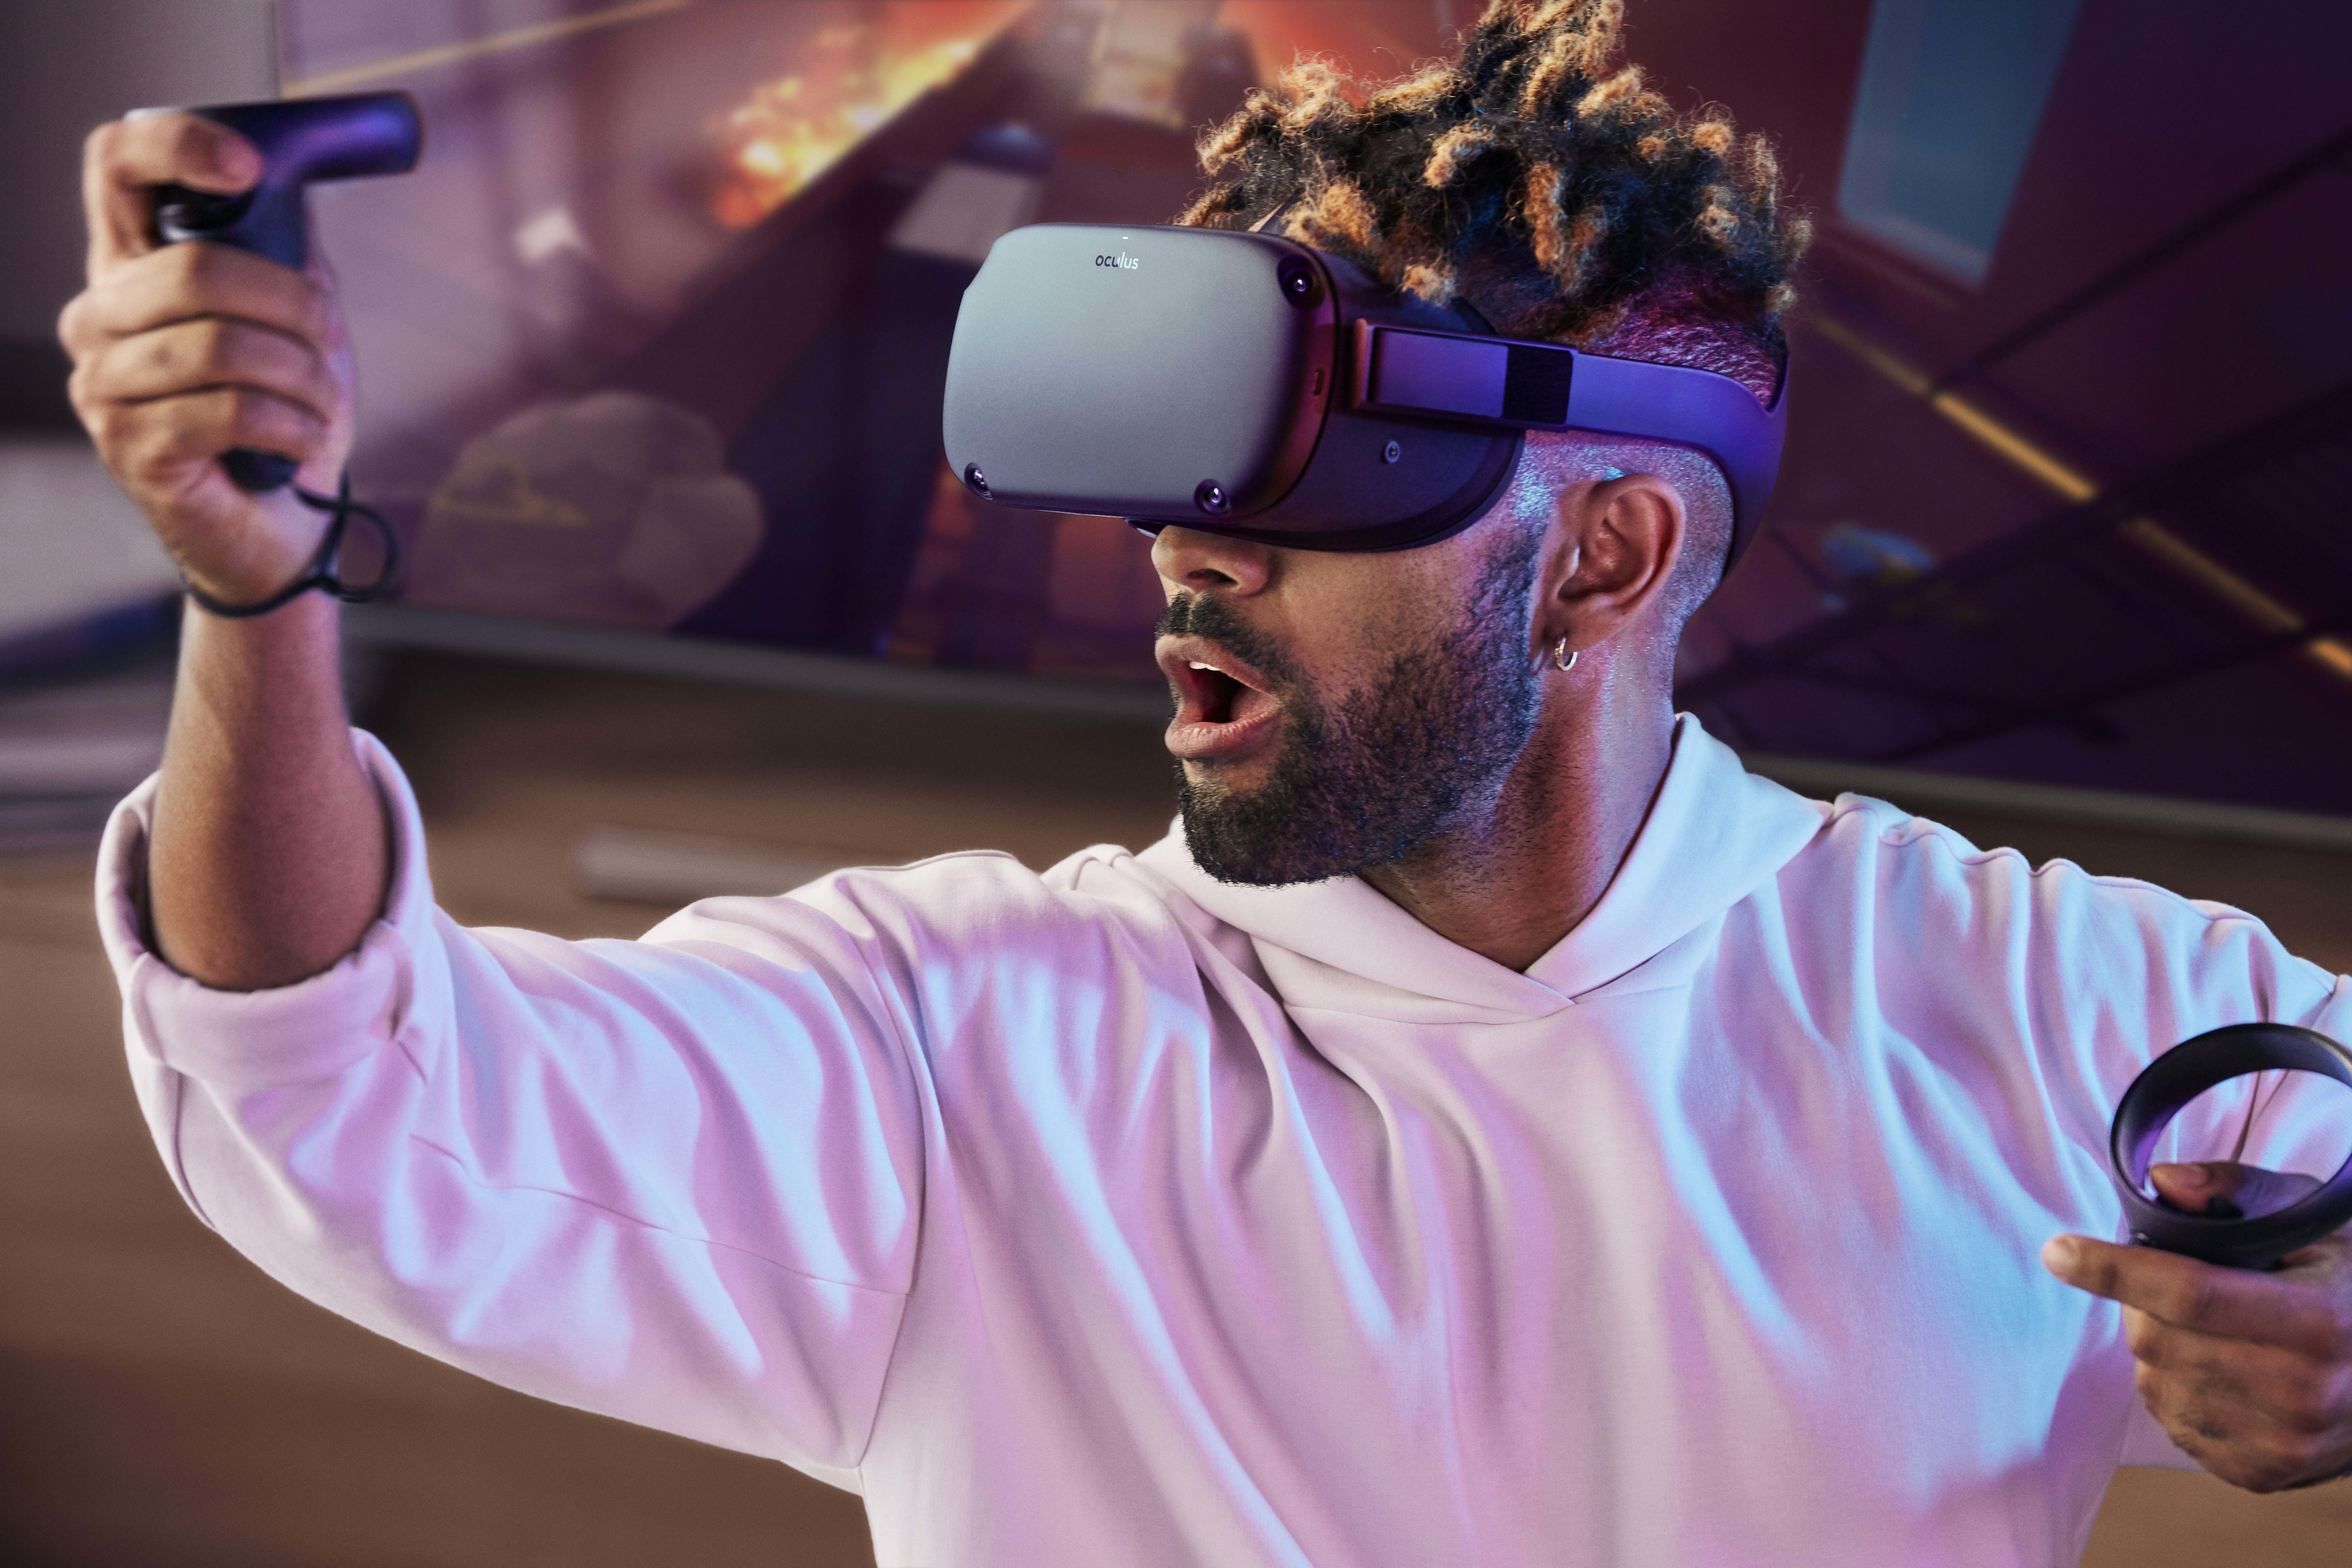 Vr игра на quest. VR очки Oculus. Шлем виртуальной реальности Oculus. ВР очки Окулус. Шлем виртуальной реальности Окулус квест.